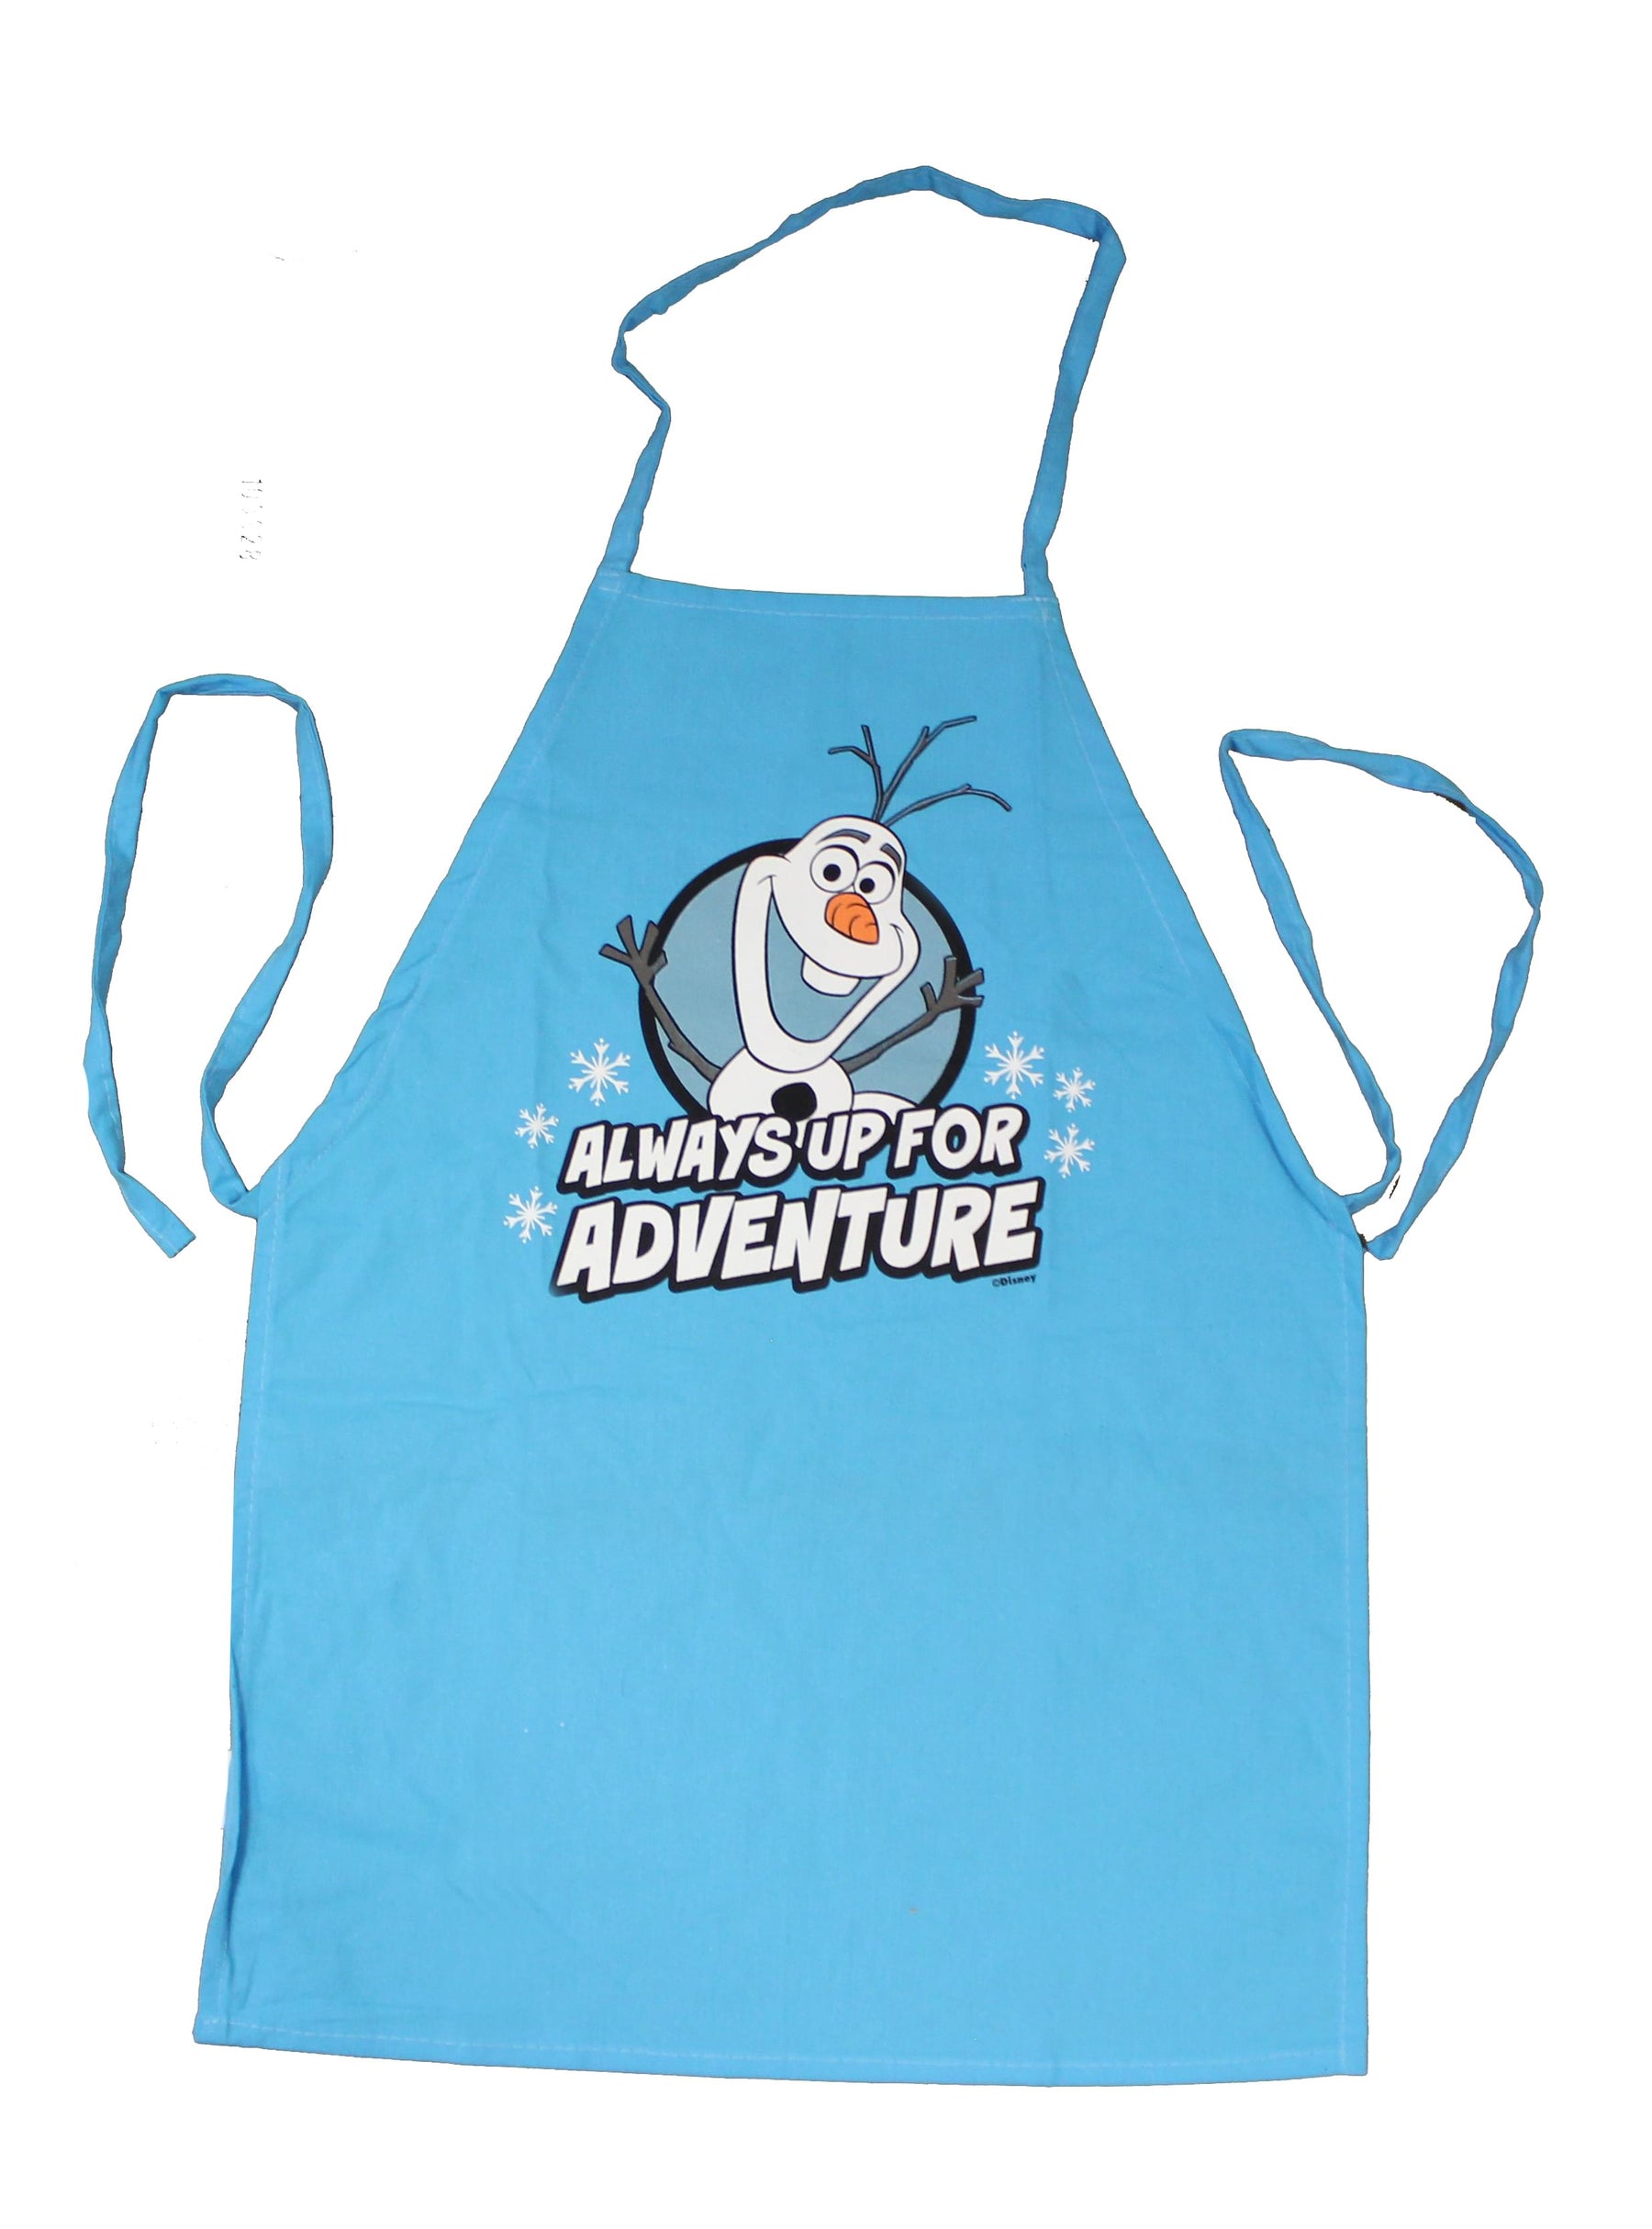 Disney Frozen Olaf "Always Up For Adventure" Kid's Apron